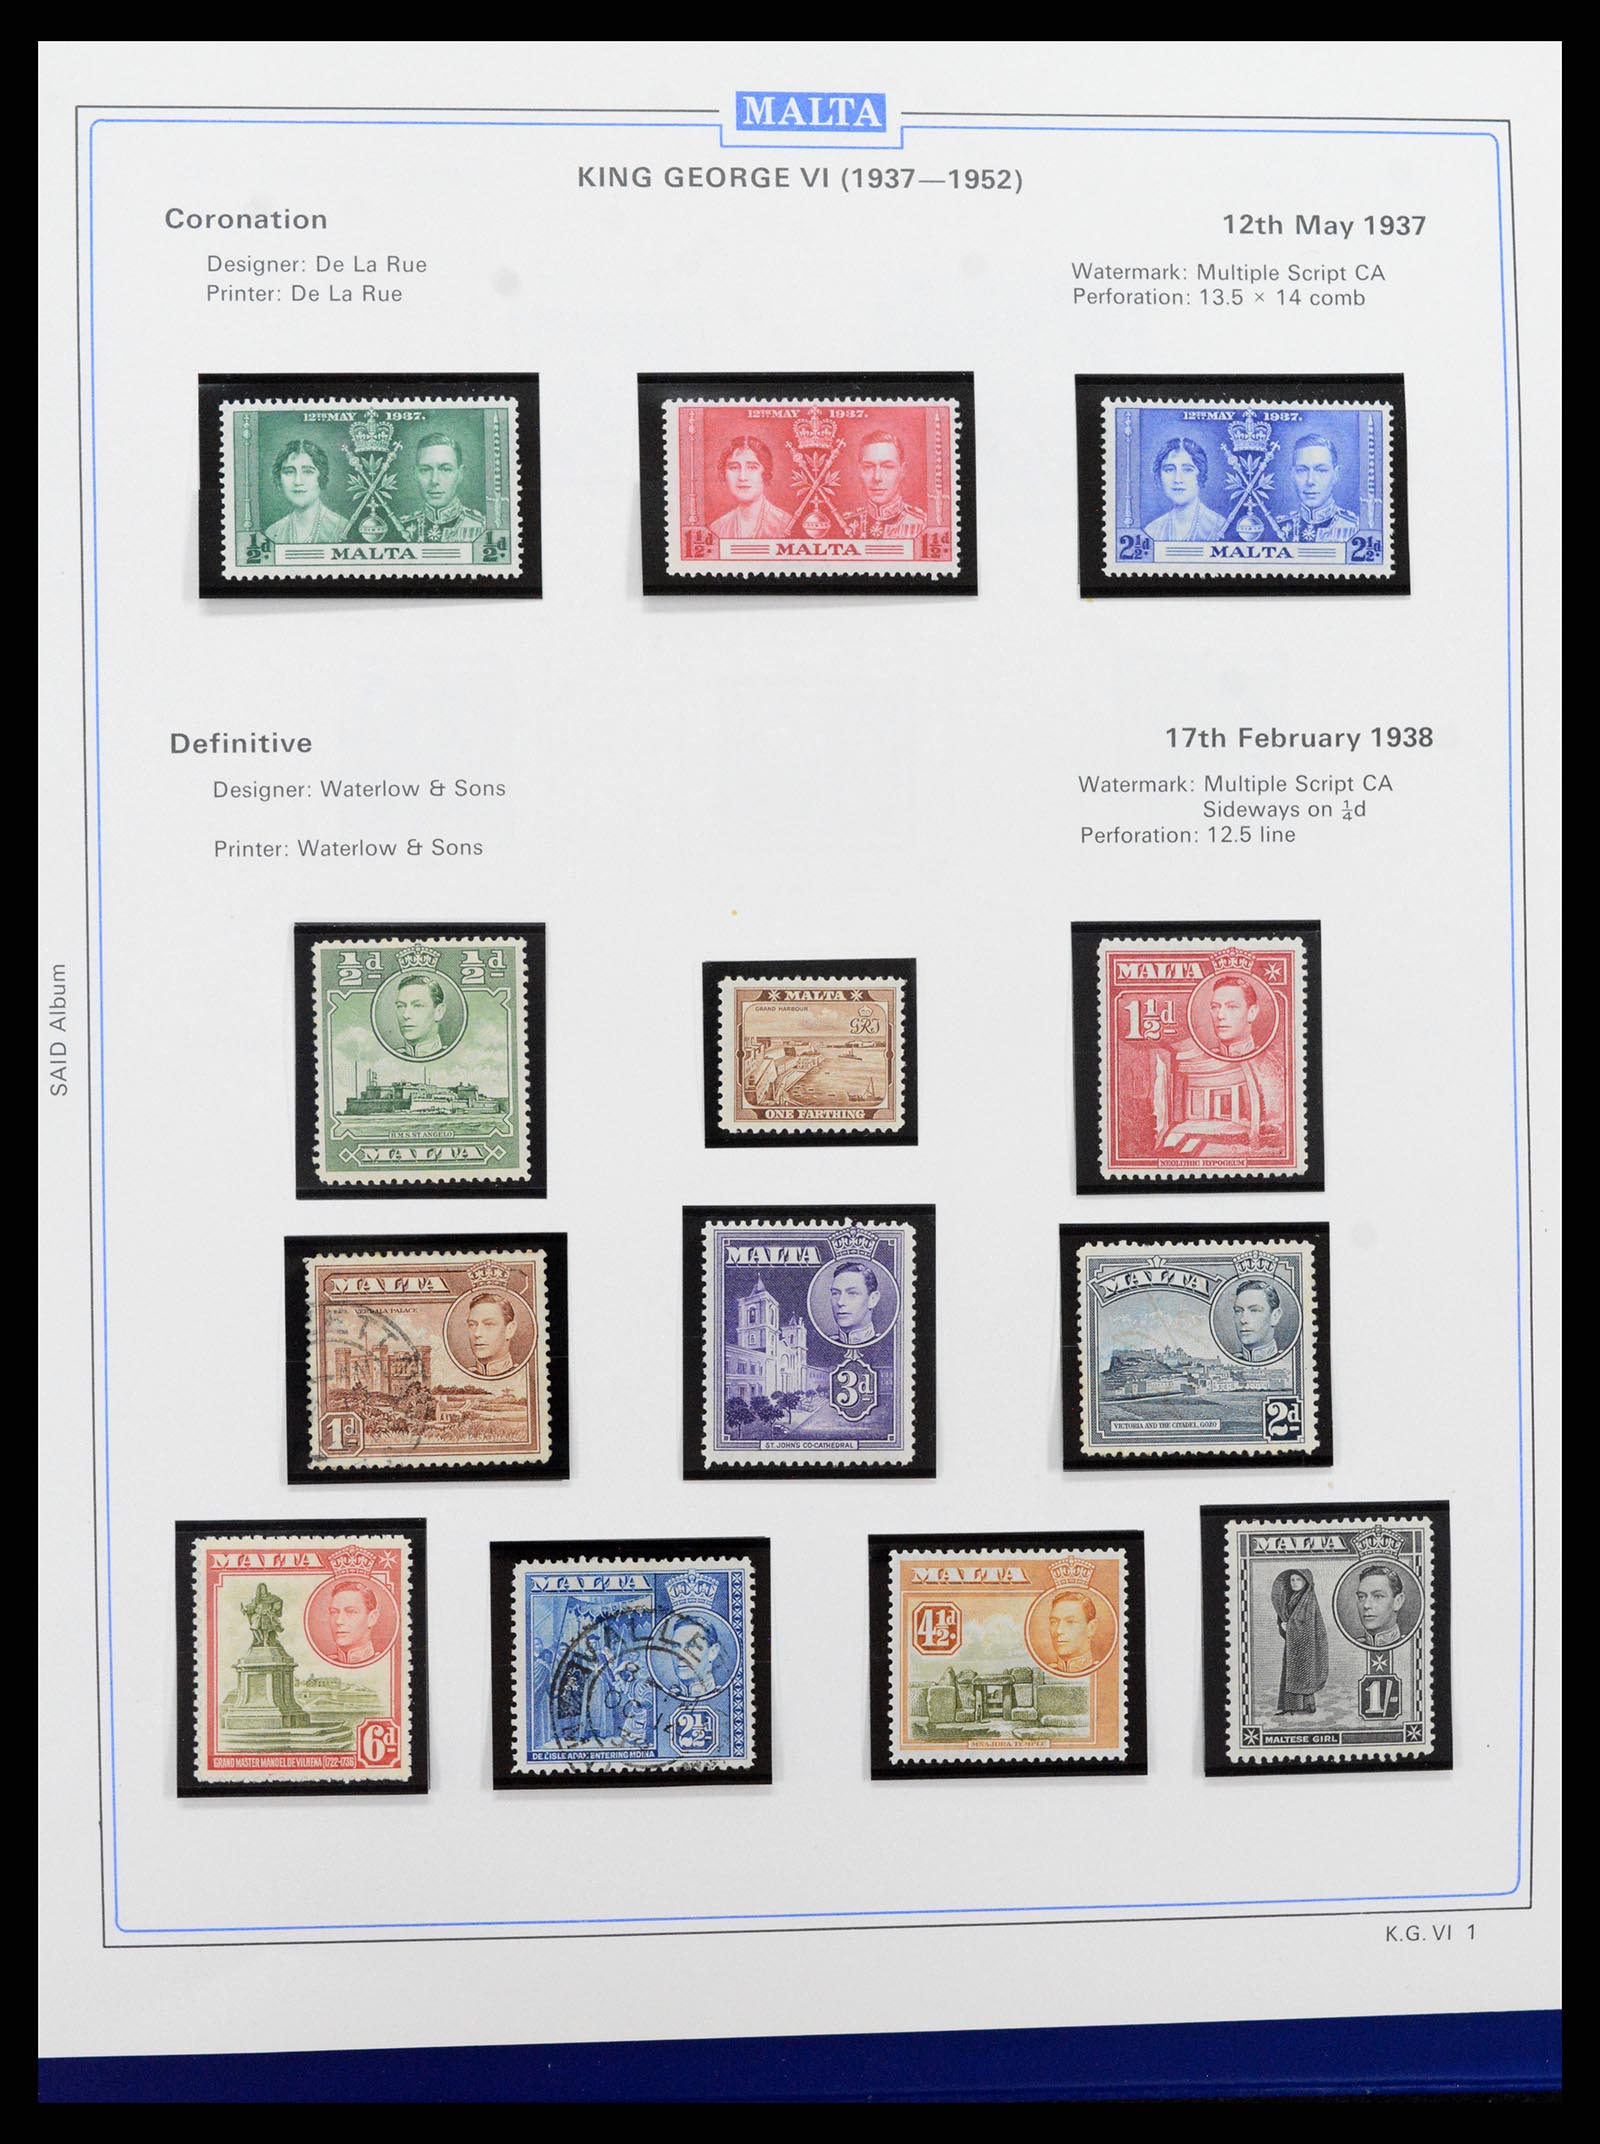 37374 015 - Stamp collection 37374 Malta 1885-2012.